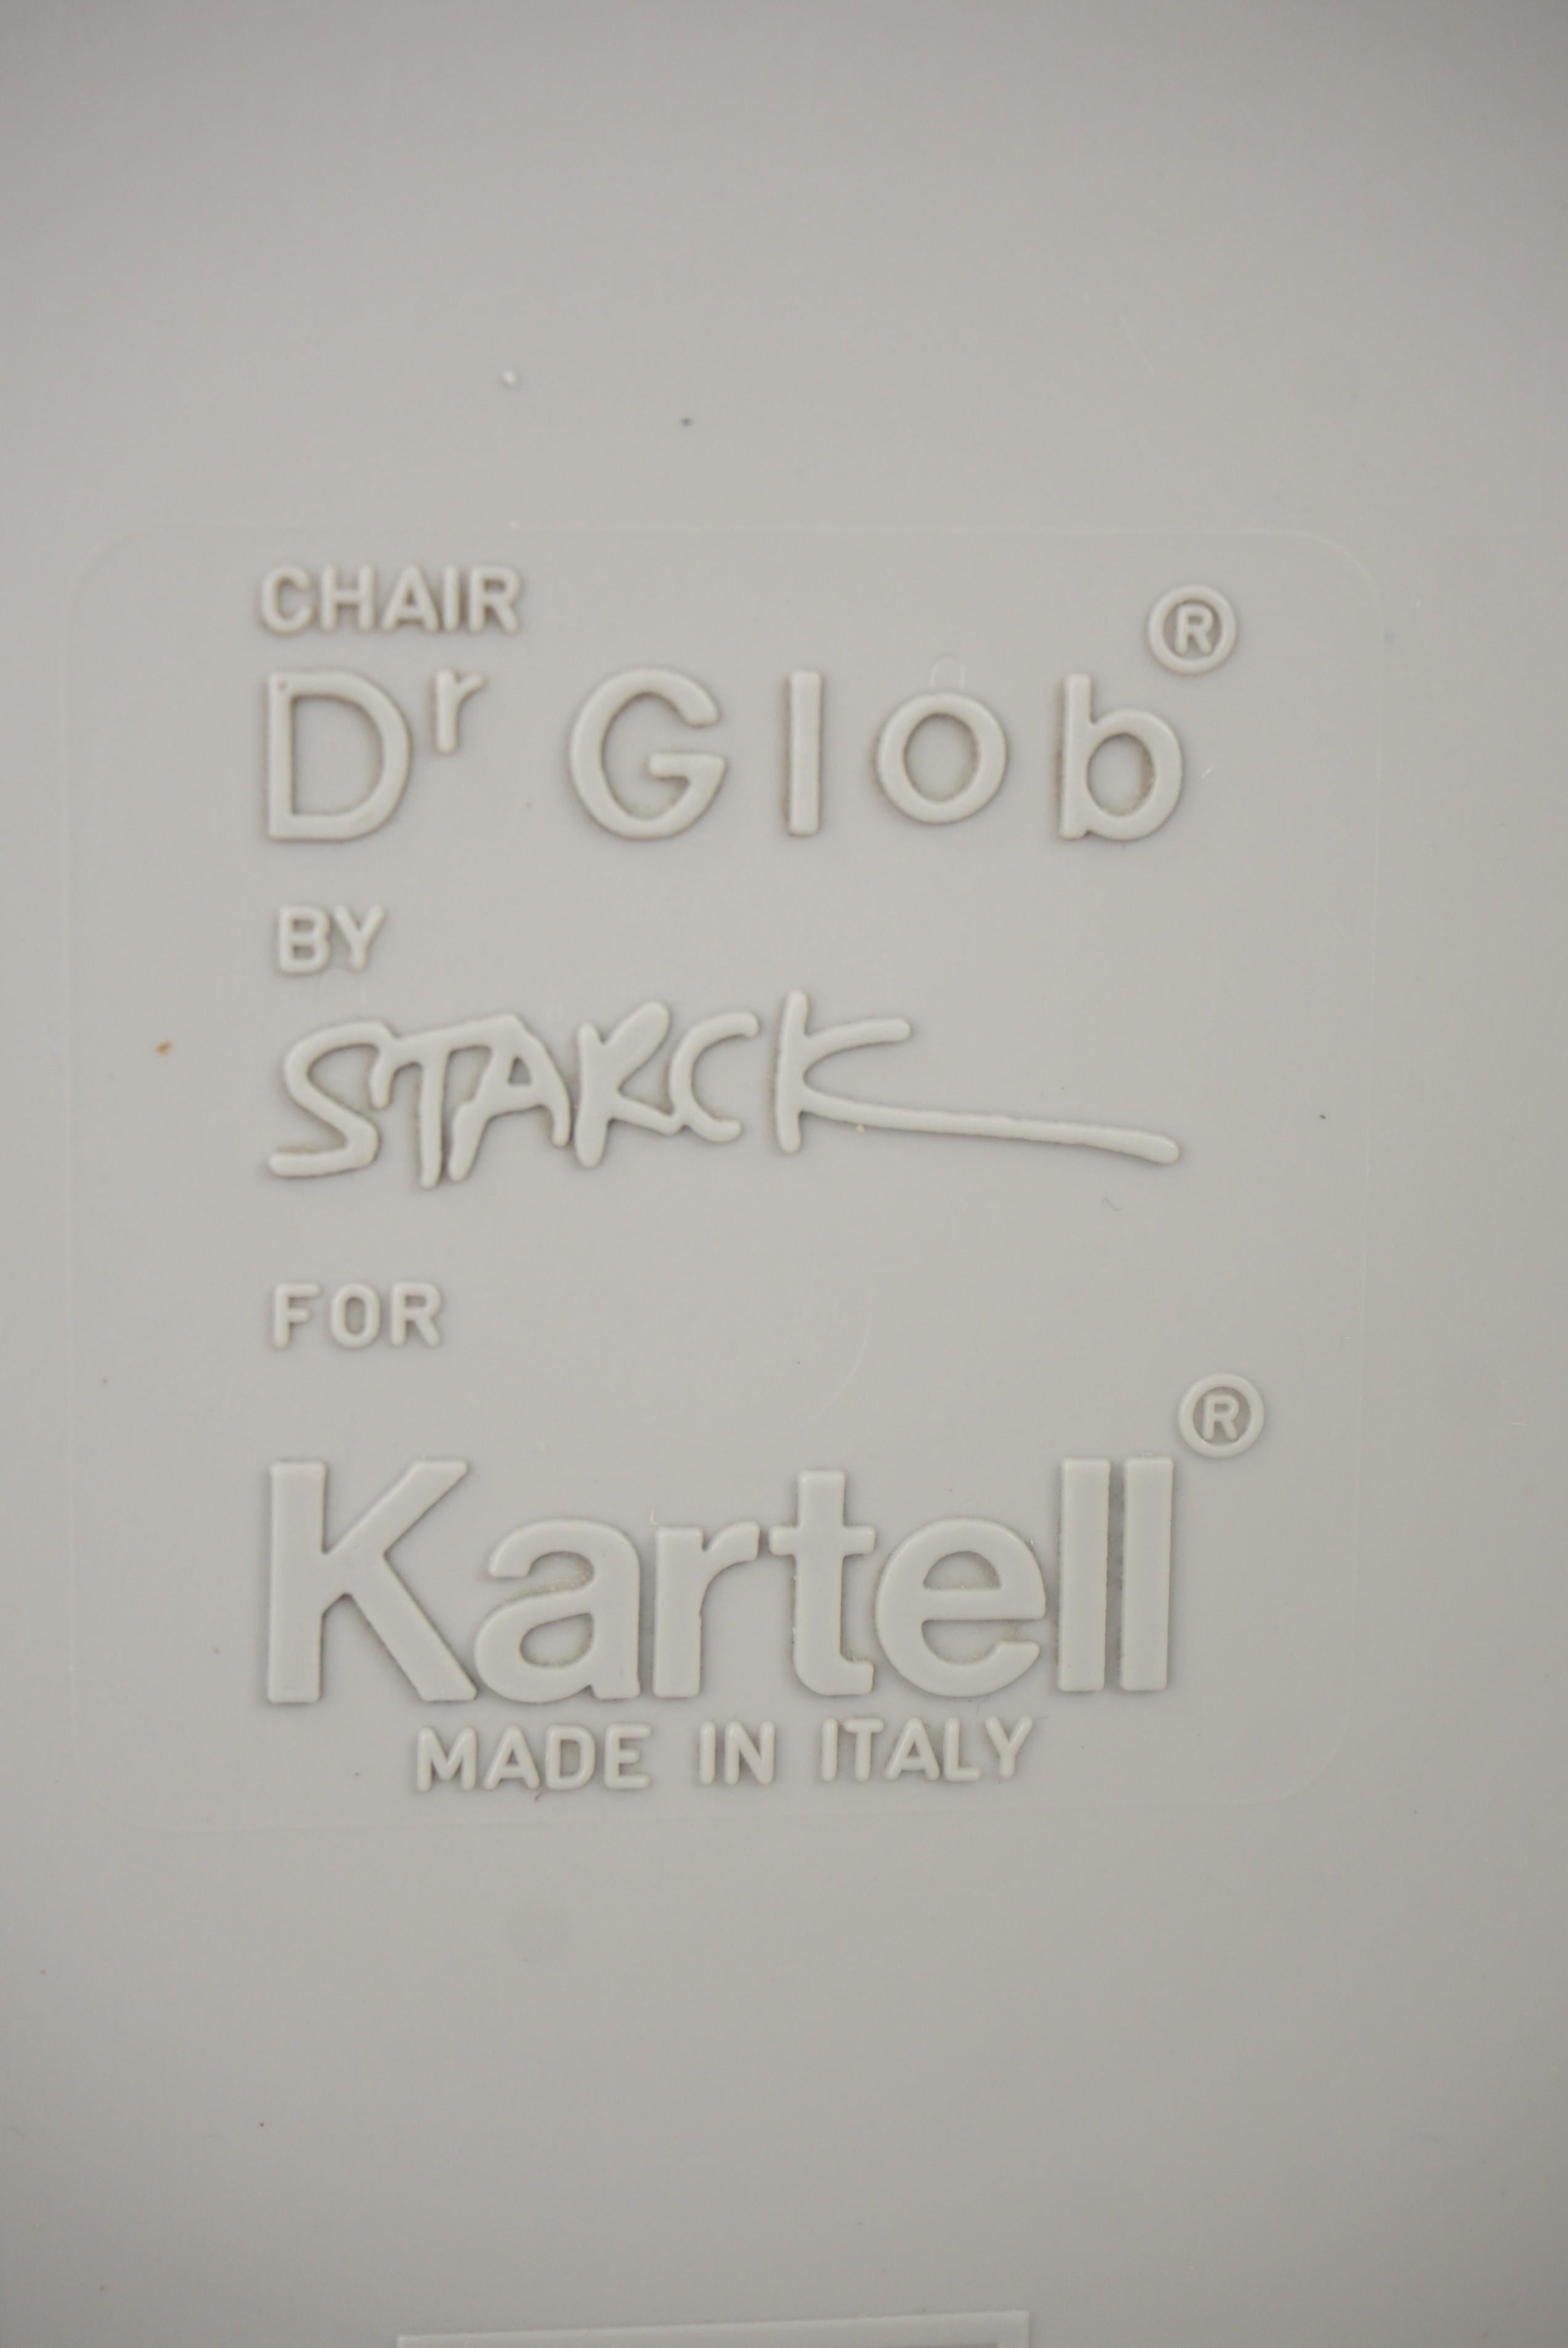 1980 Philippe Starck Design Set of 4 Chairs Dr Glob Model for Kartell 8